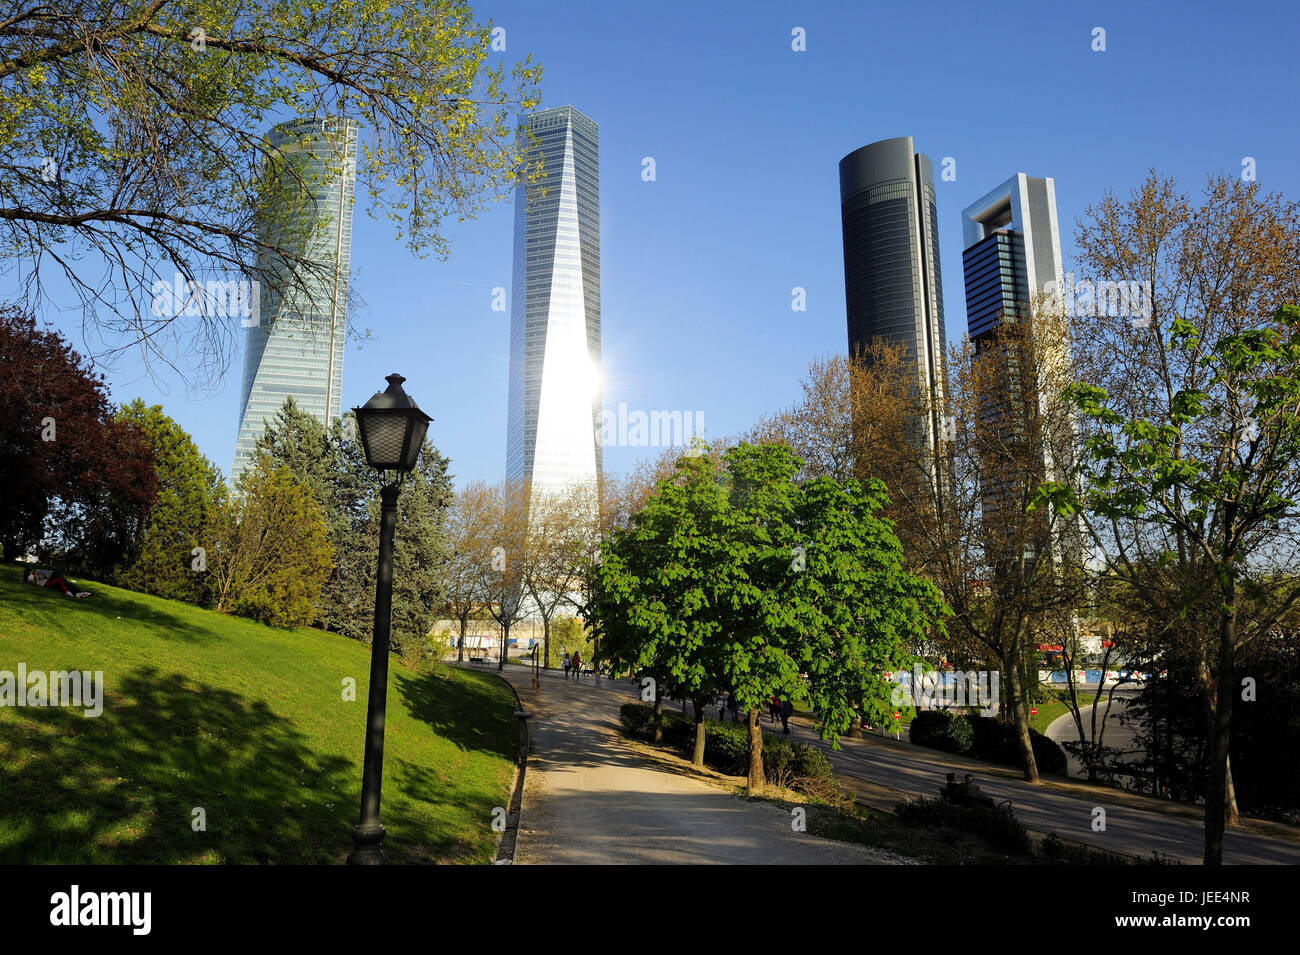 Spagna, Madrid, Torre Espacio, Torre de Cristal, Torre Sacyr Vallehermoso, Torre Repsol, Foto Stock